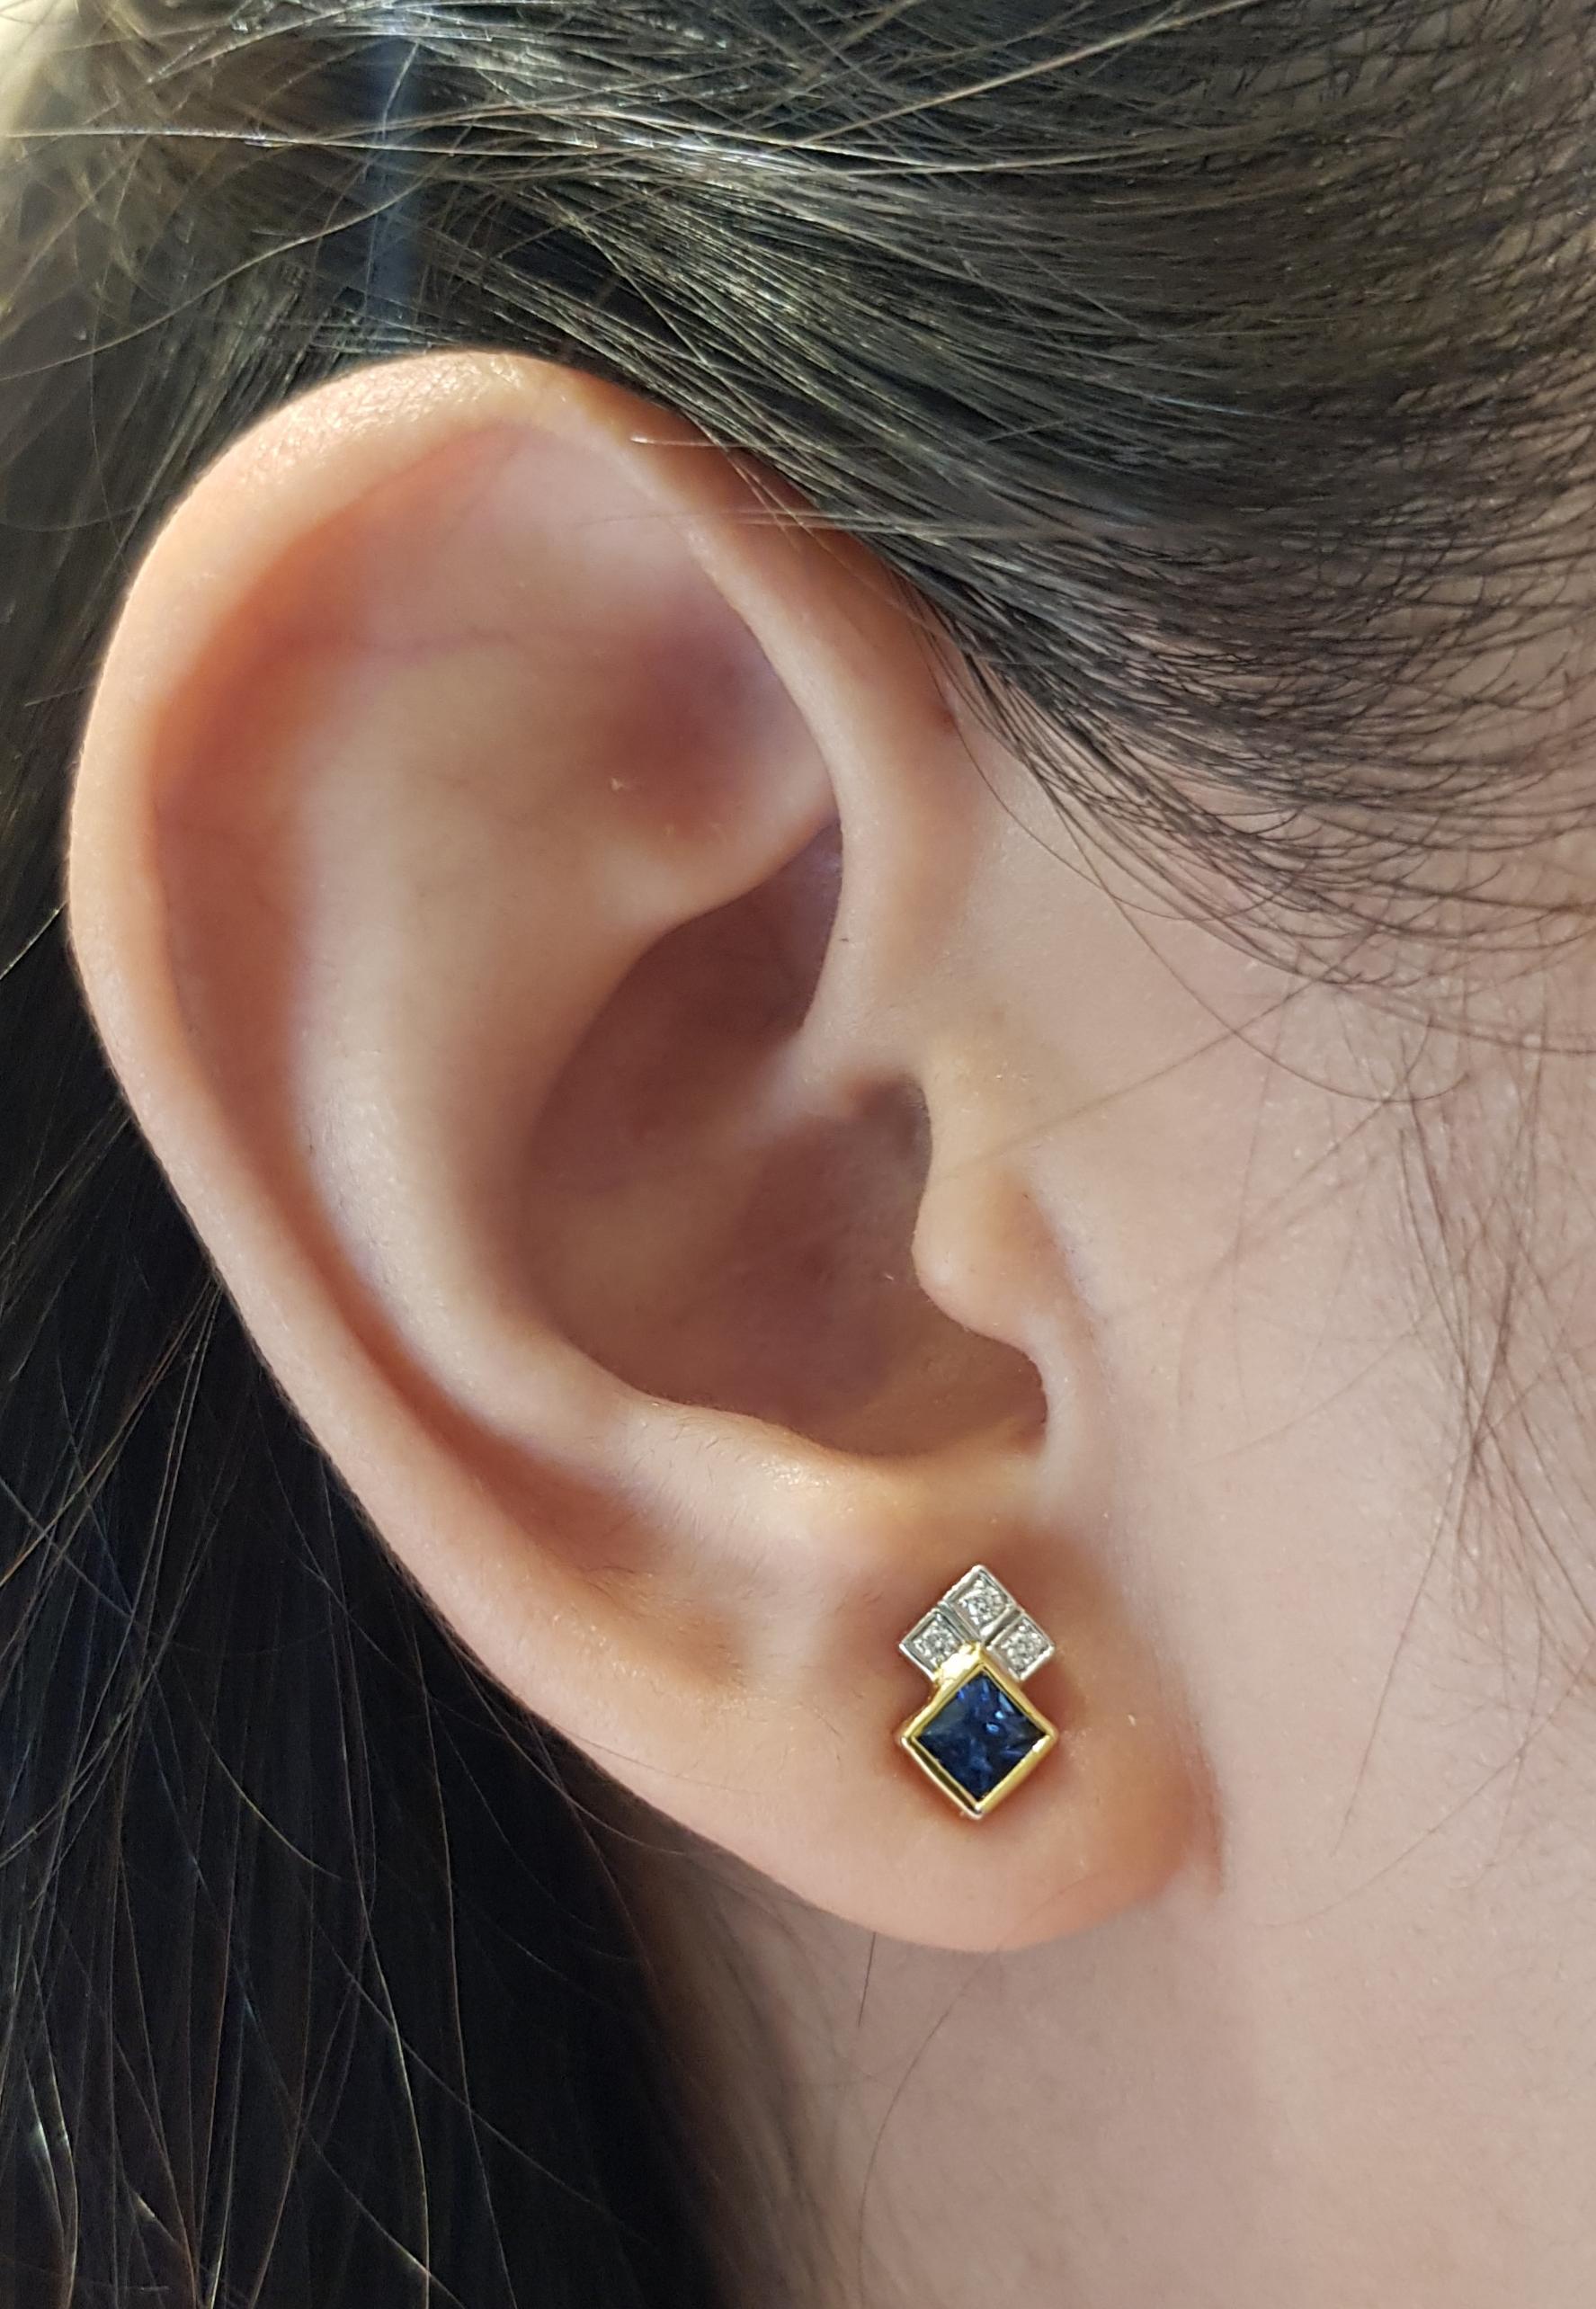 Blue Sapphire 0.58 carat with Diamond 0.05 carat Earrings set in 18 Karat Gold Settings

Width:  0.6 cm 
Length: 0.9 cm
Total Weight: 1.94 grams

